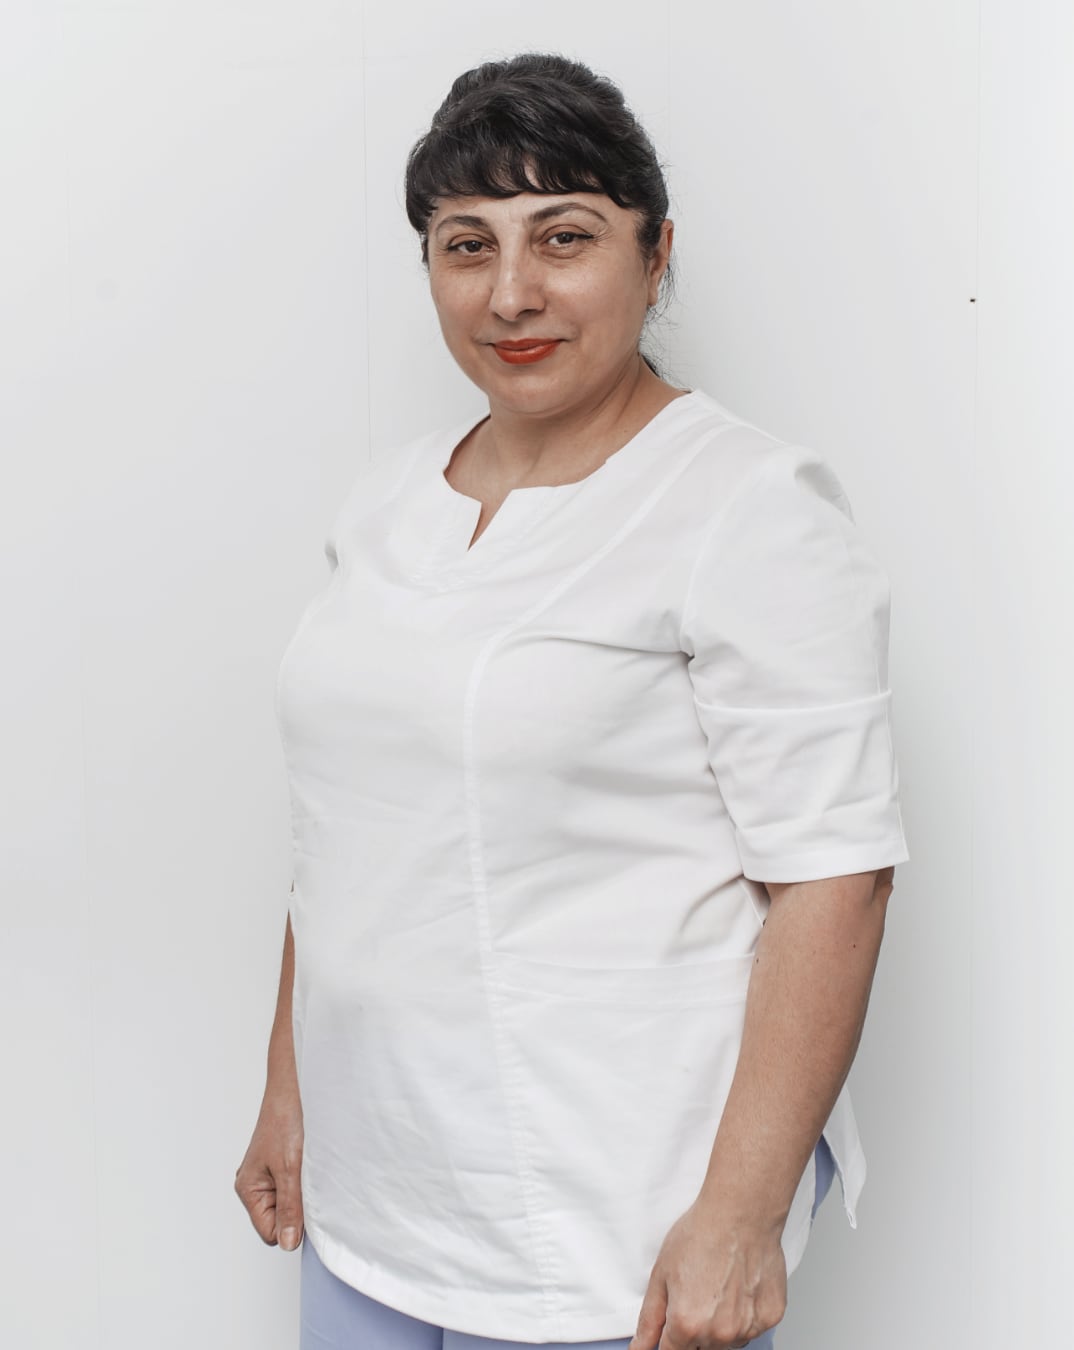 Пилишвили Марина Владимировна